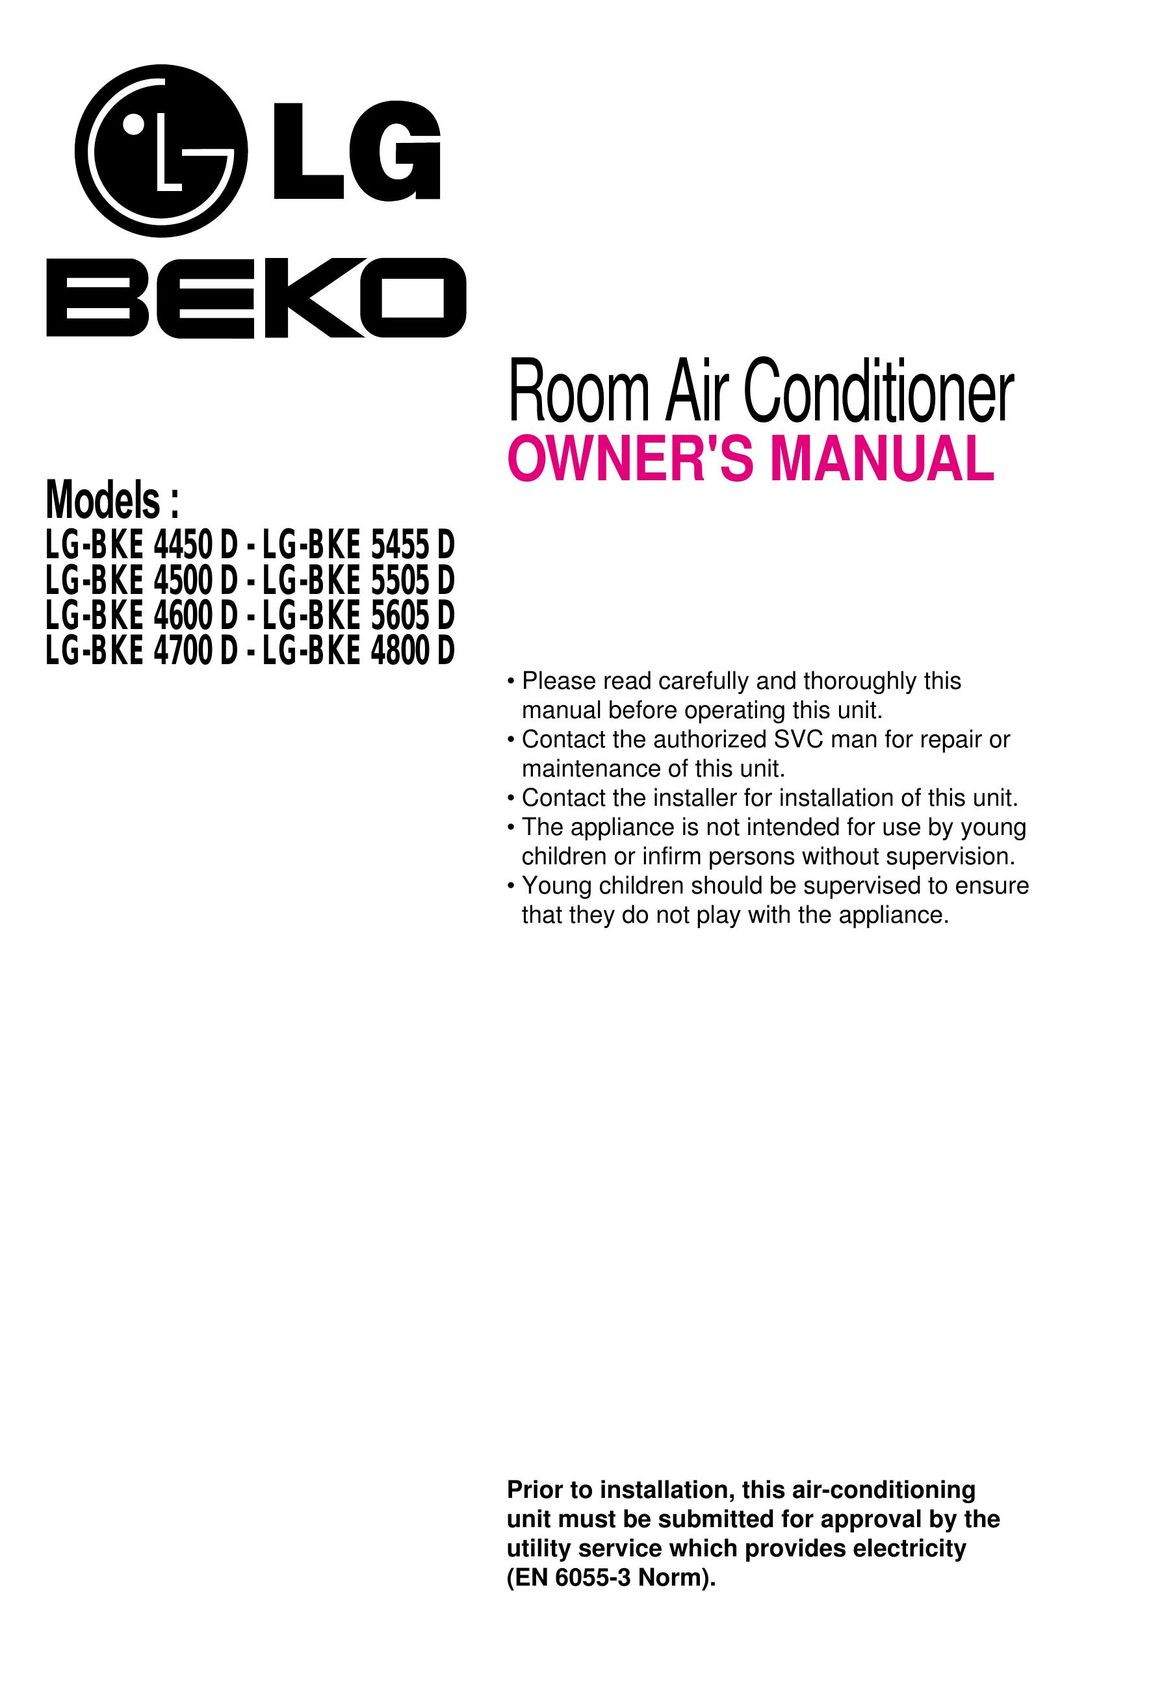 Beko LG-BKE4500 D, LG-BKE5505 D Air Conditioner User Manual